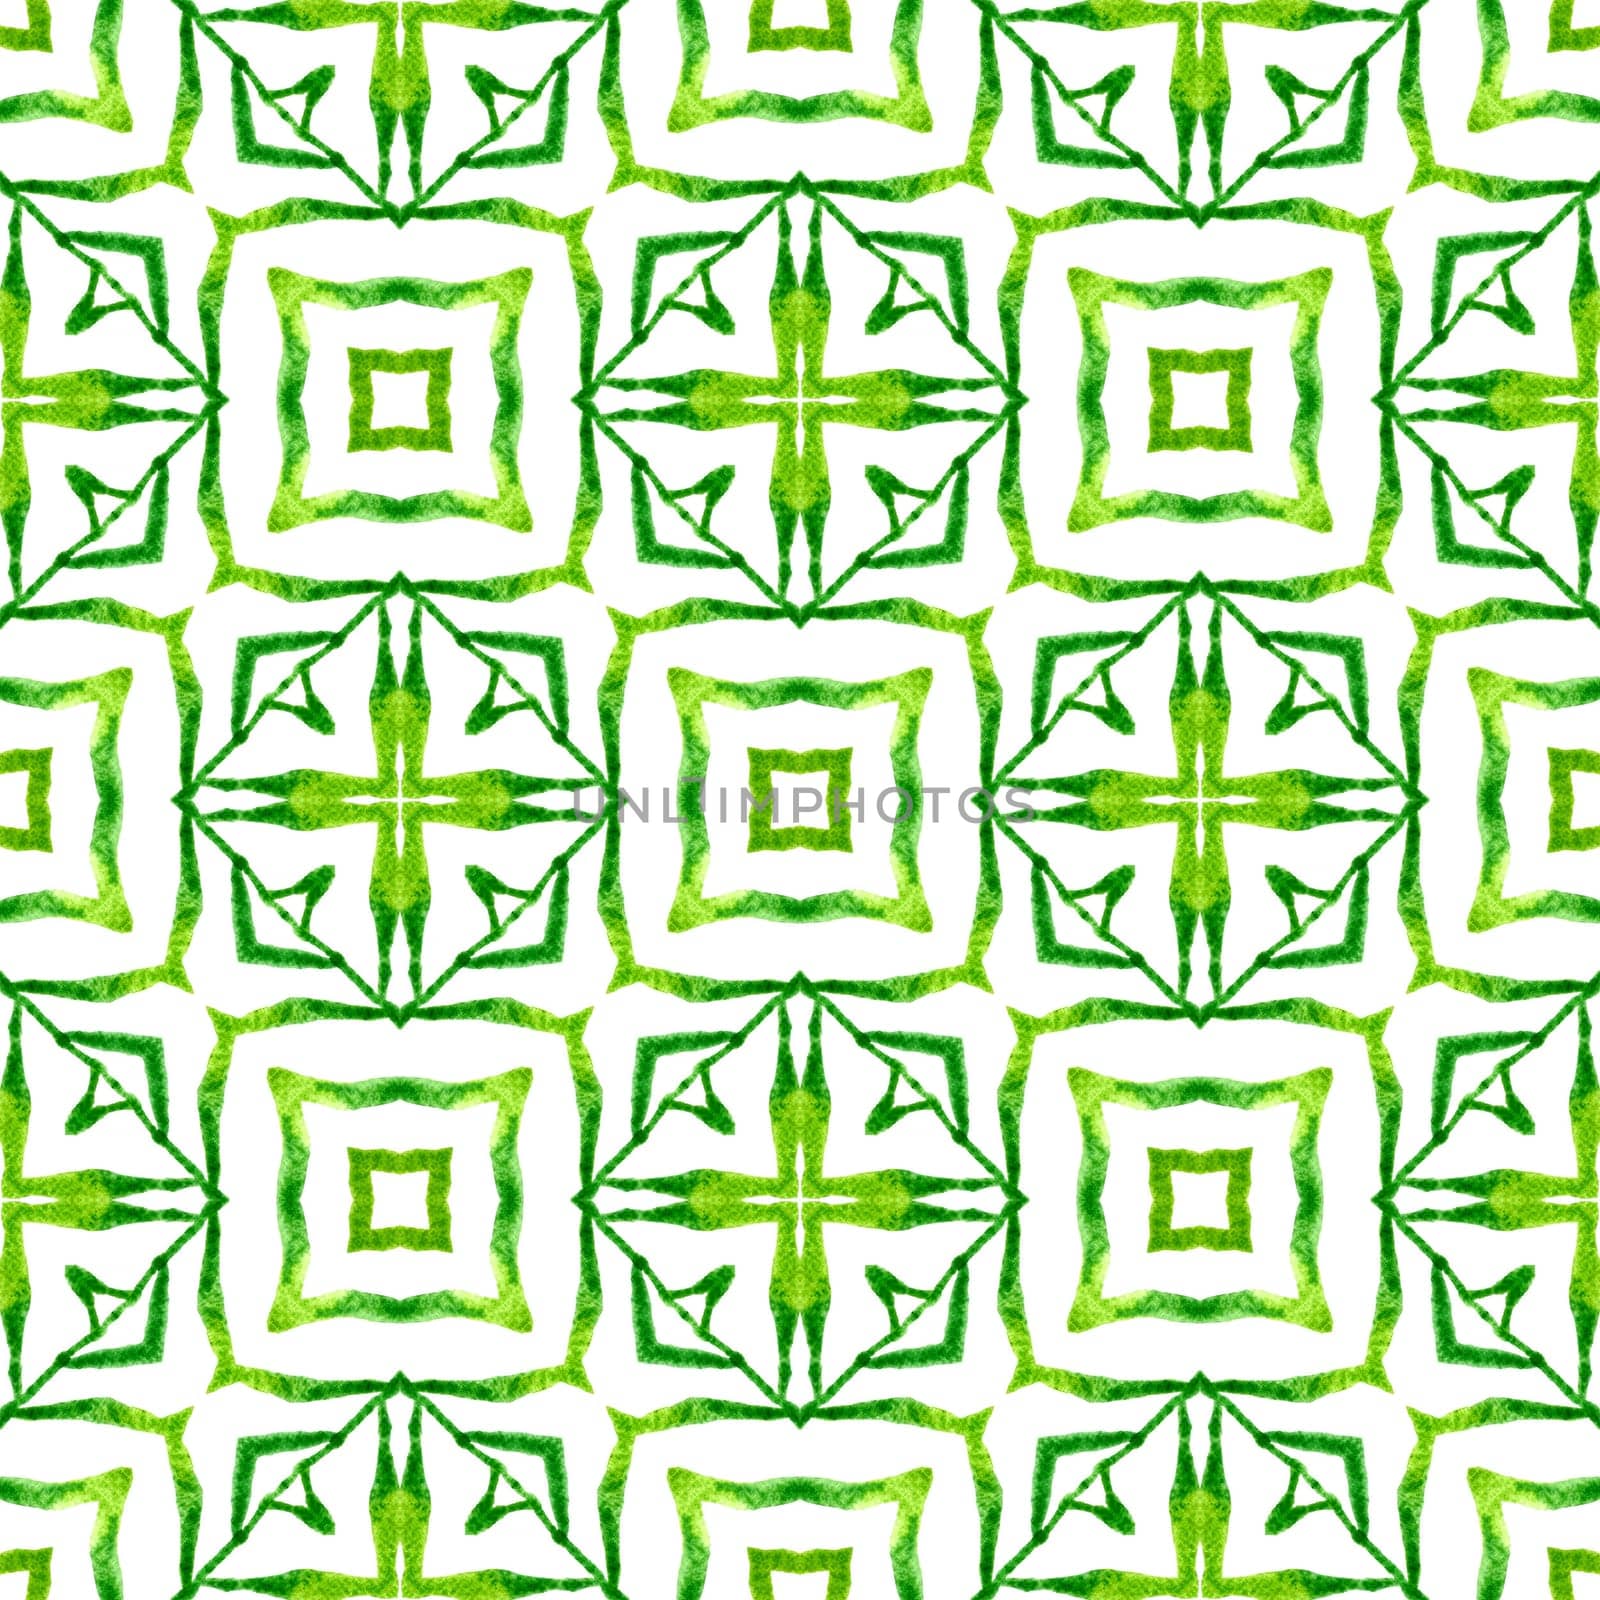 Striped hand drawn design. Green posh boho chic summer design. Textile ready authentic print, swimwear fabric, wallpaper, wrapping. Repeating striped hand drawn border.